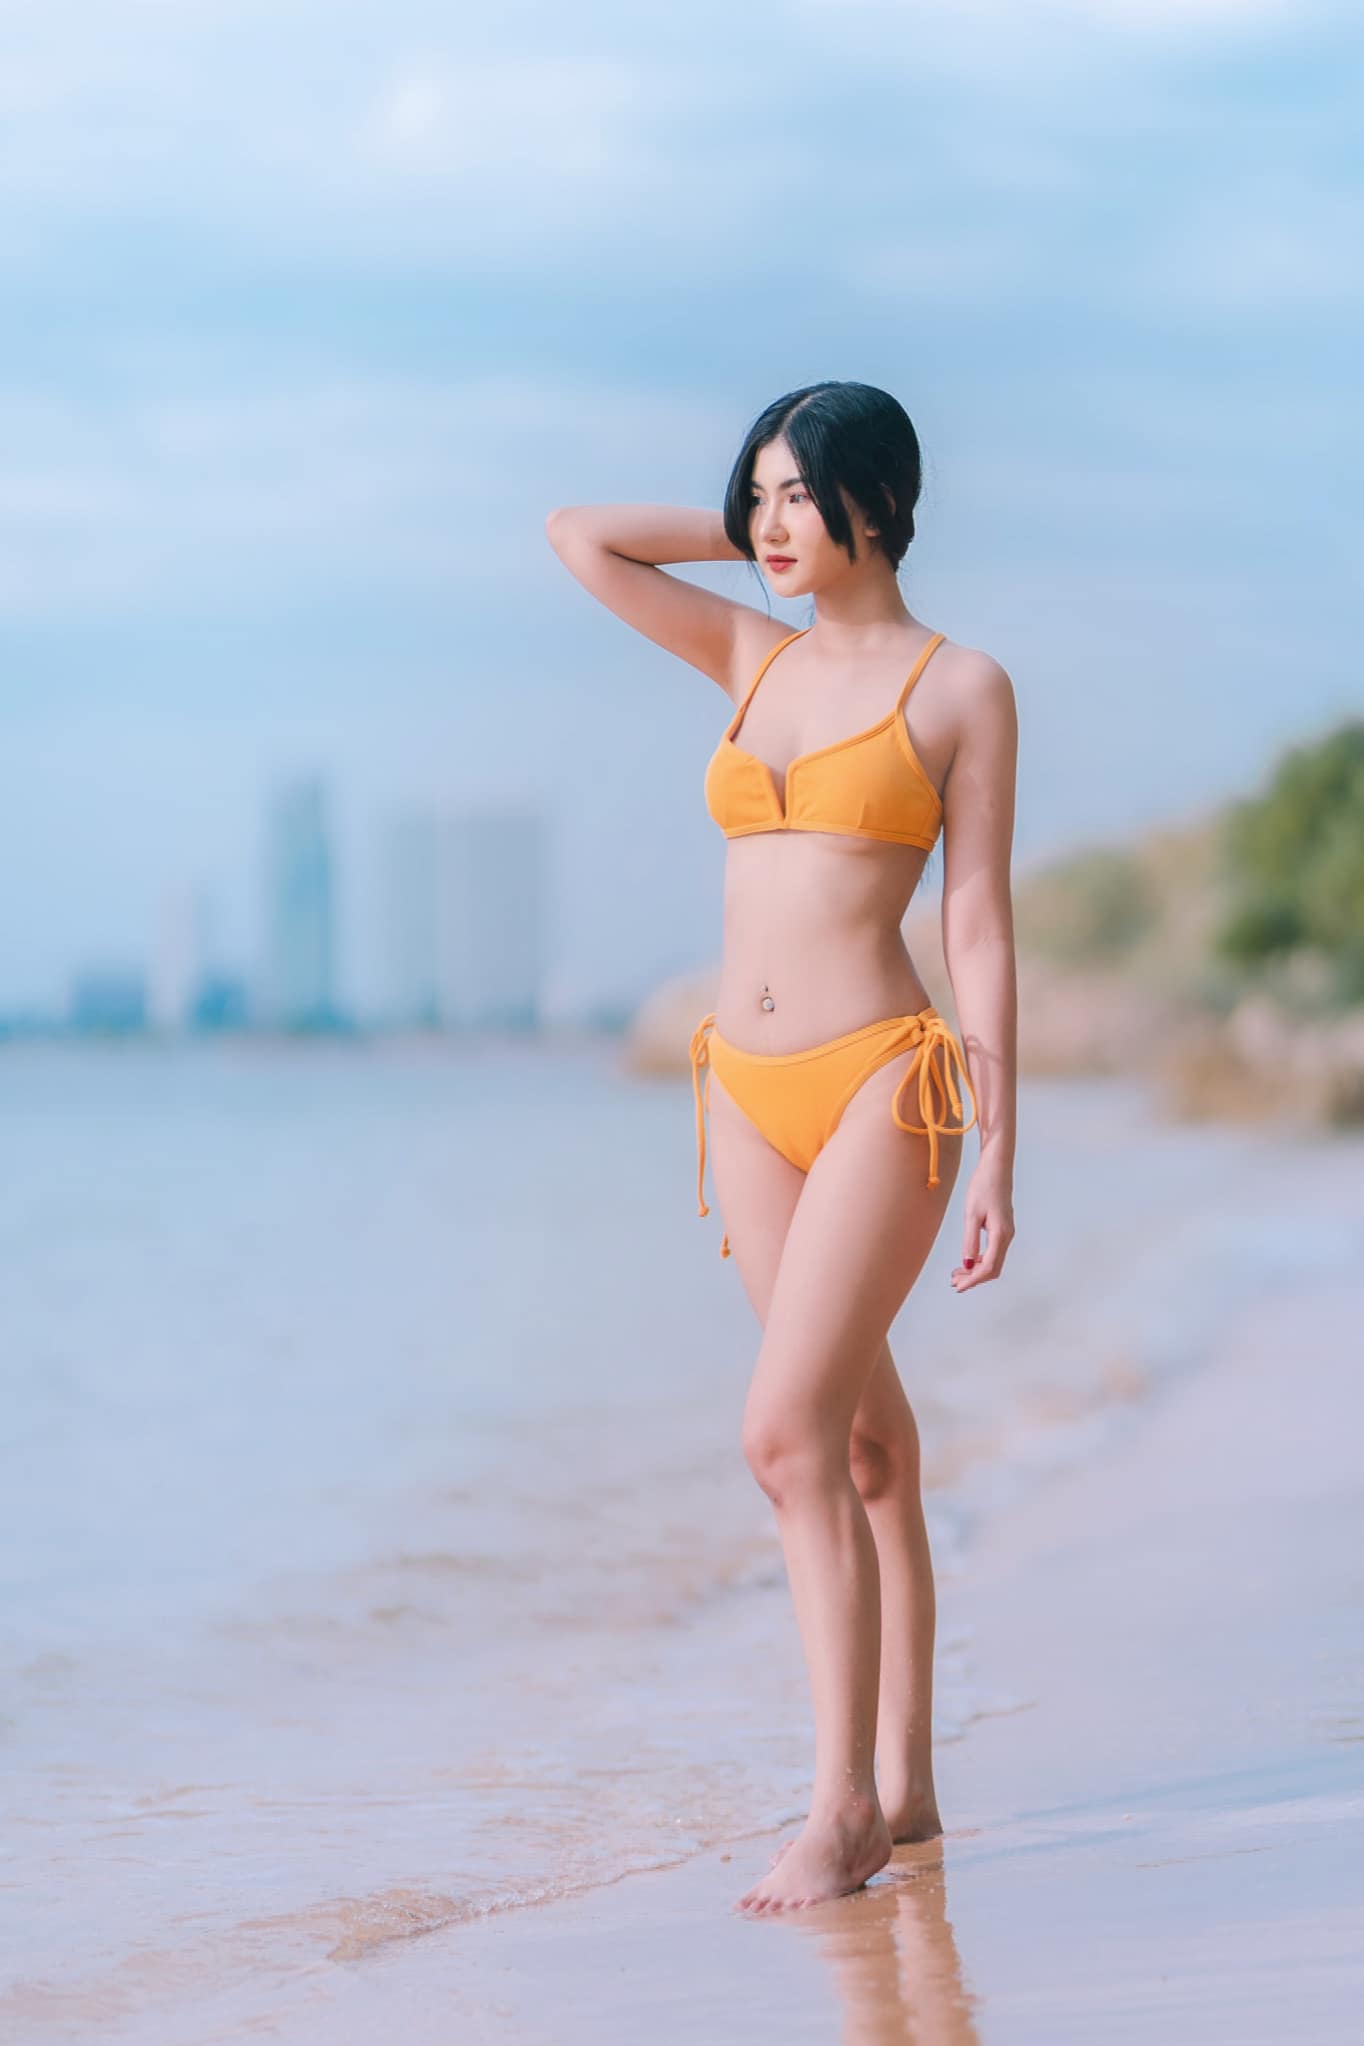 Snookusa Chaenjengsilp hot thailand model bikini girl